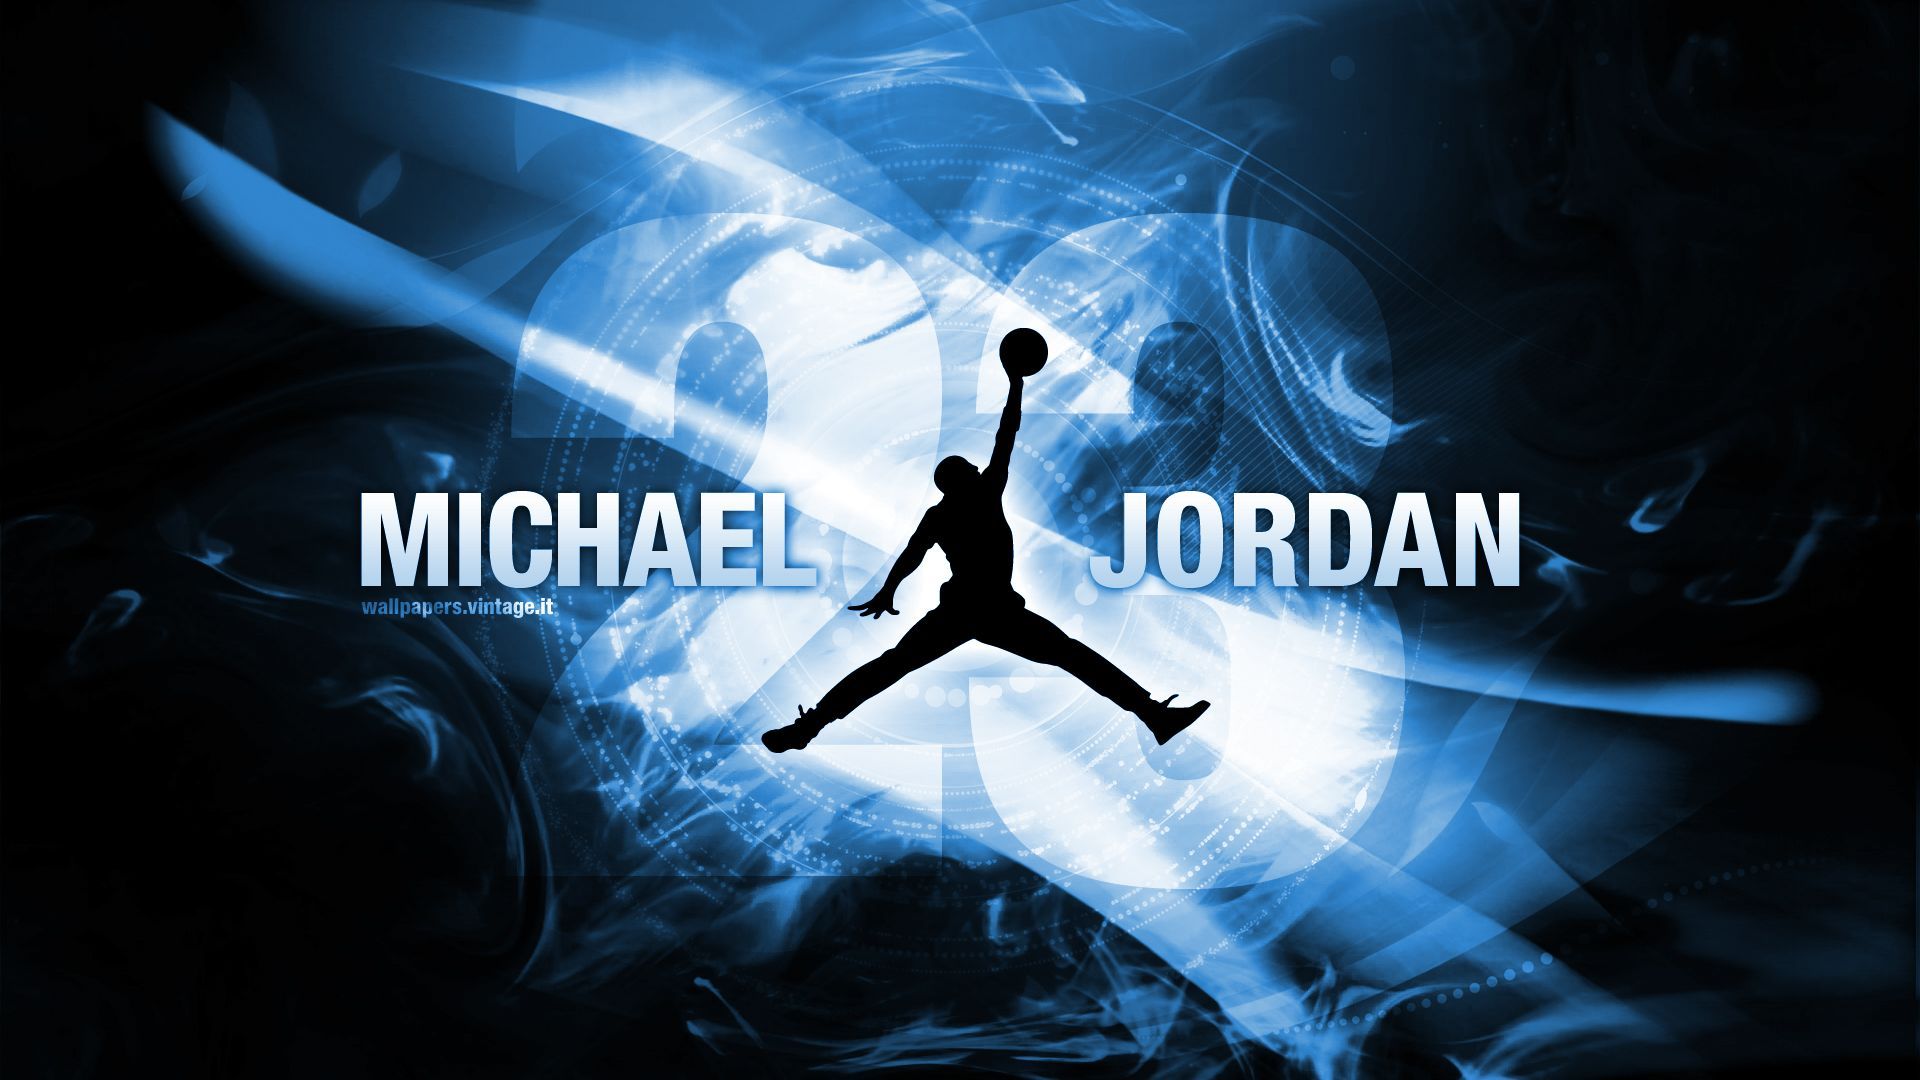 Michael Jordan wallpaper - Free Desktop HD iPad iPhone wallpapers